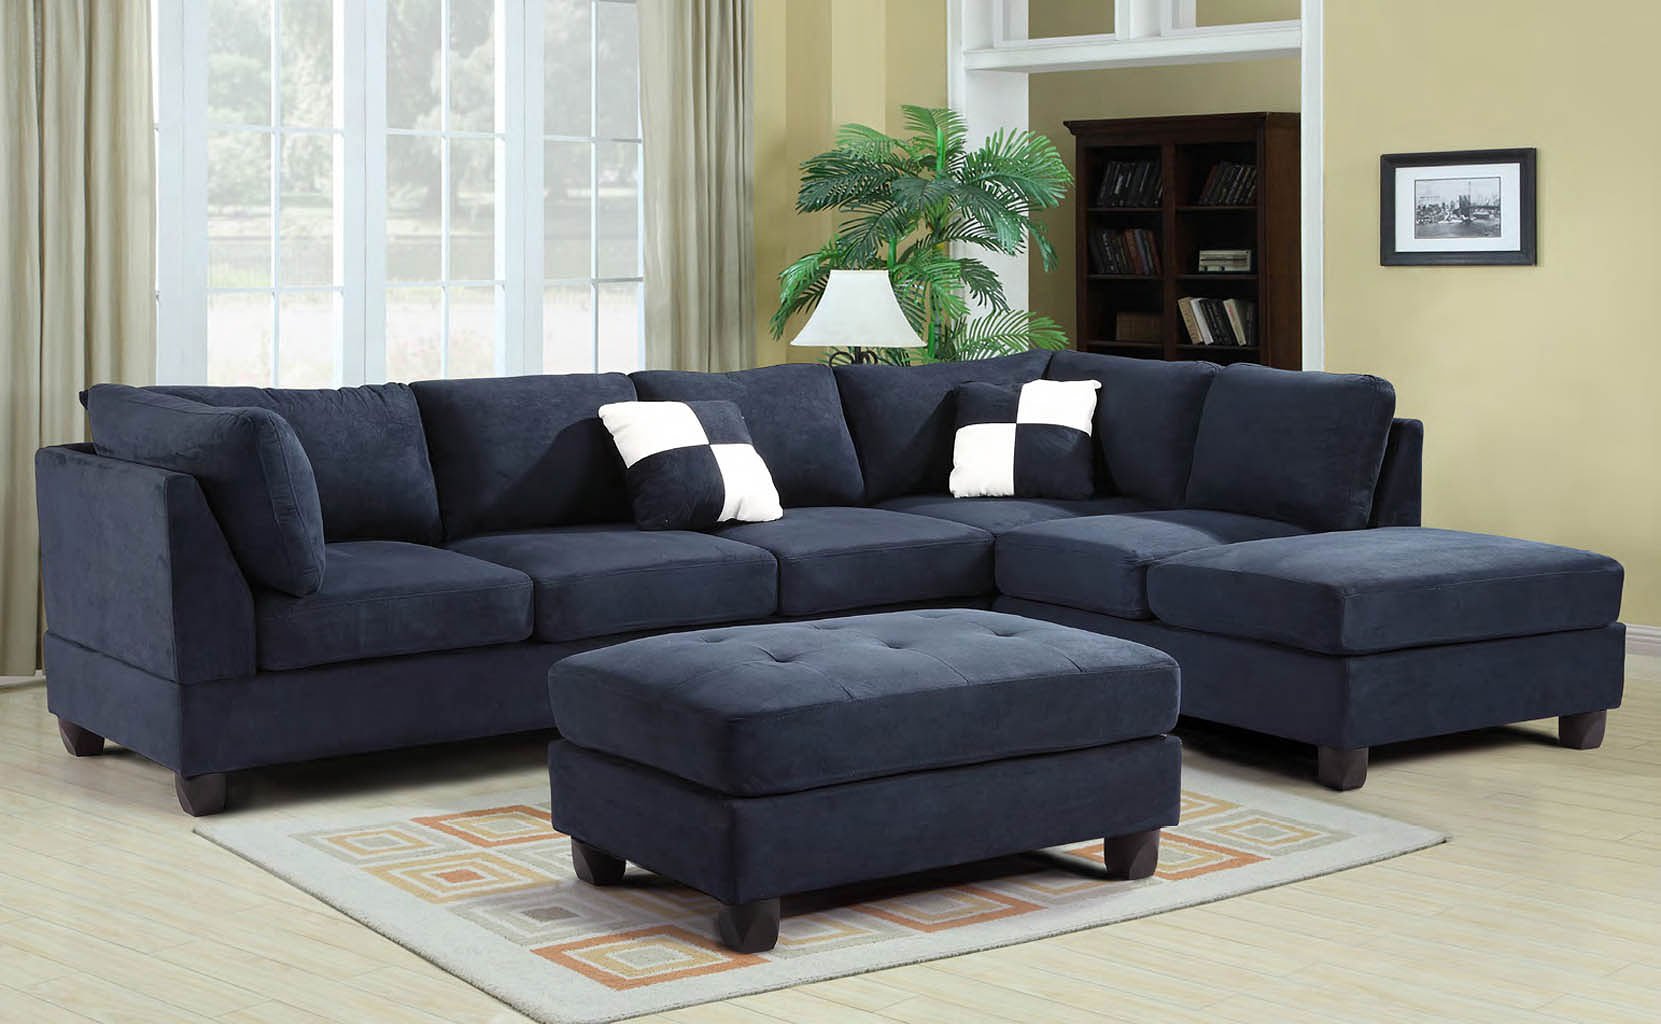 G630 Reversible Sectional Set (Navy Blue) - Living Room Sets - Living